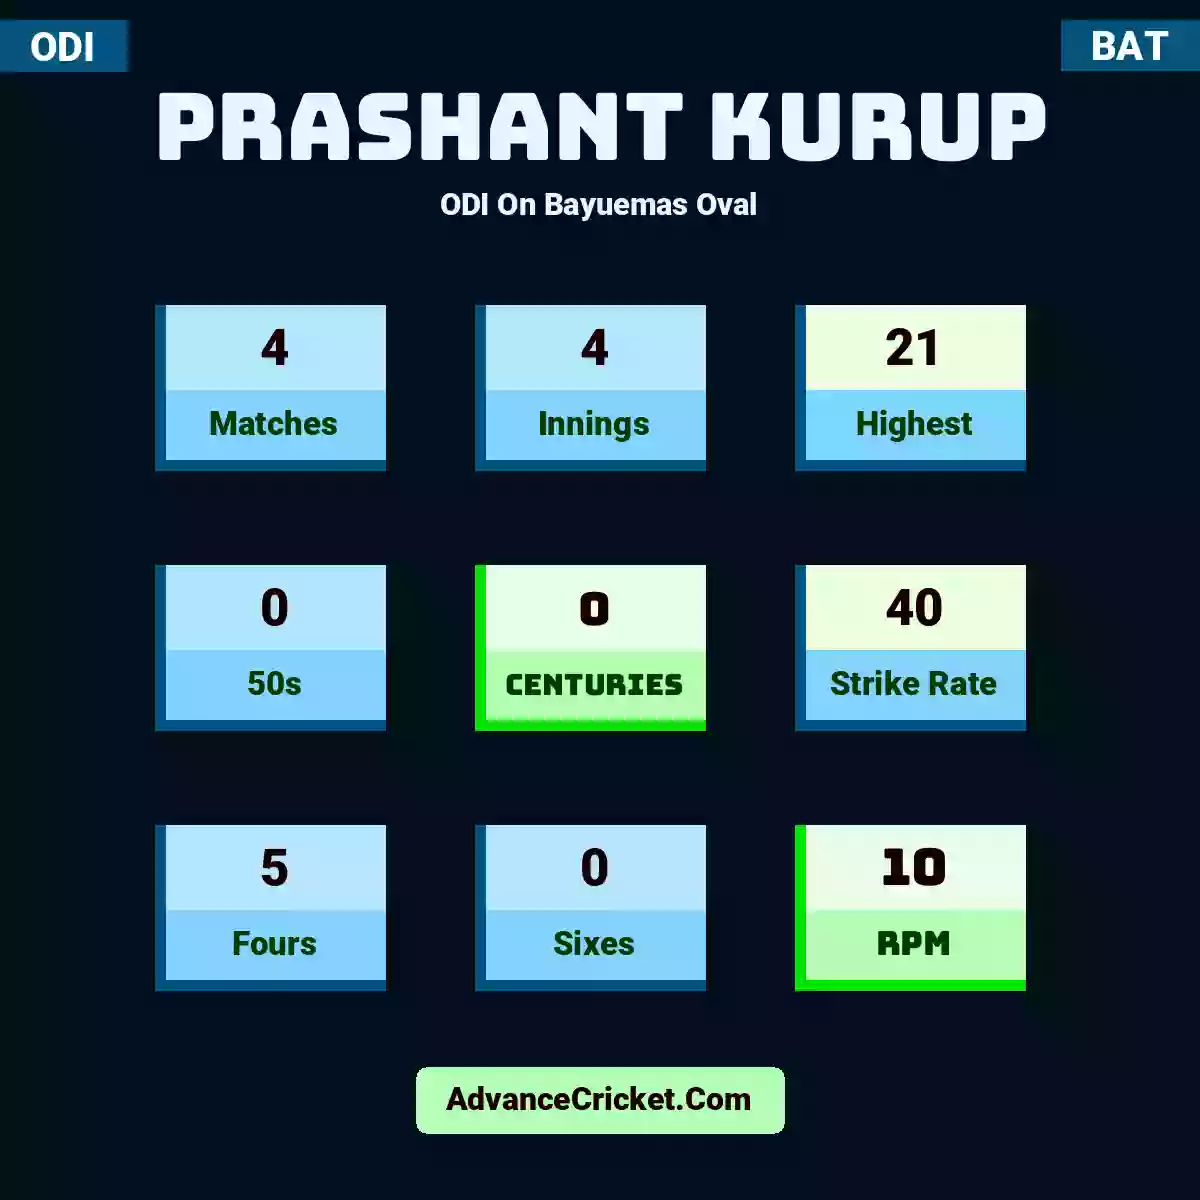 Prashant Kurup ODI  On Bayuemas Oval, Prashant Kurup played 4 matches, scored 21 runs as highest, 0 half-centuries, and 0 centuries, with a strike rate of 40. P.Kurup hit 5 fours and 0 sixes, with an RPM of 10.